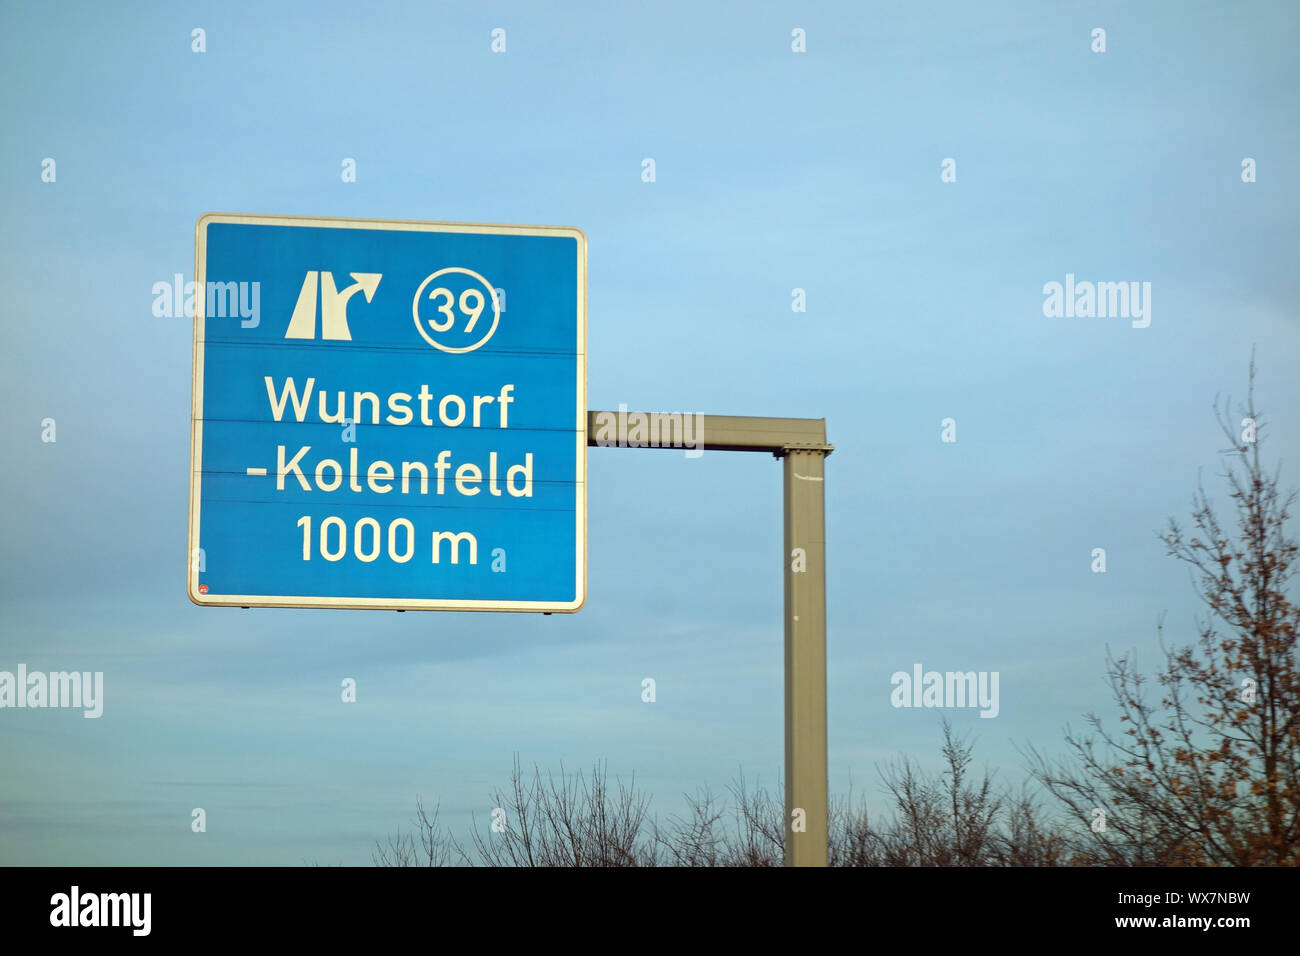 highway sign,  wunstorf-kolenfeld, 1000m, 39 Stock Photo